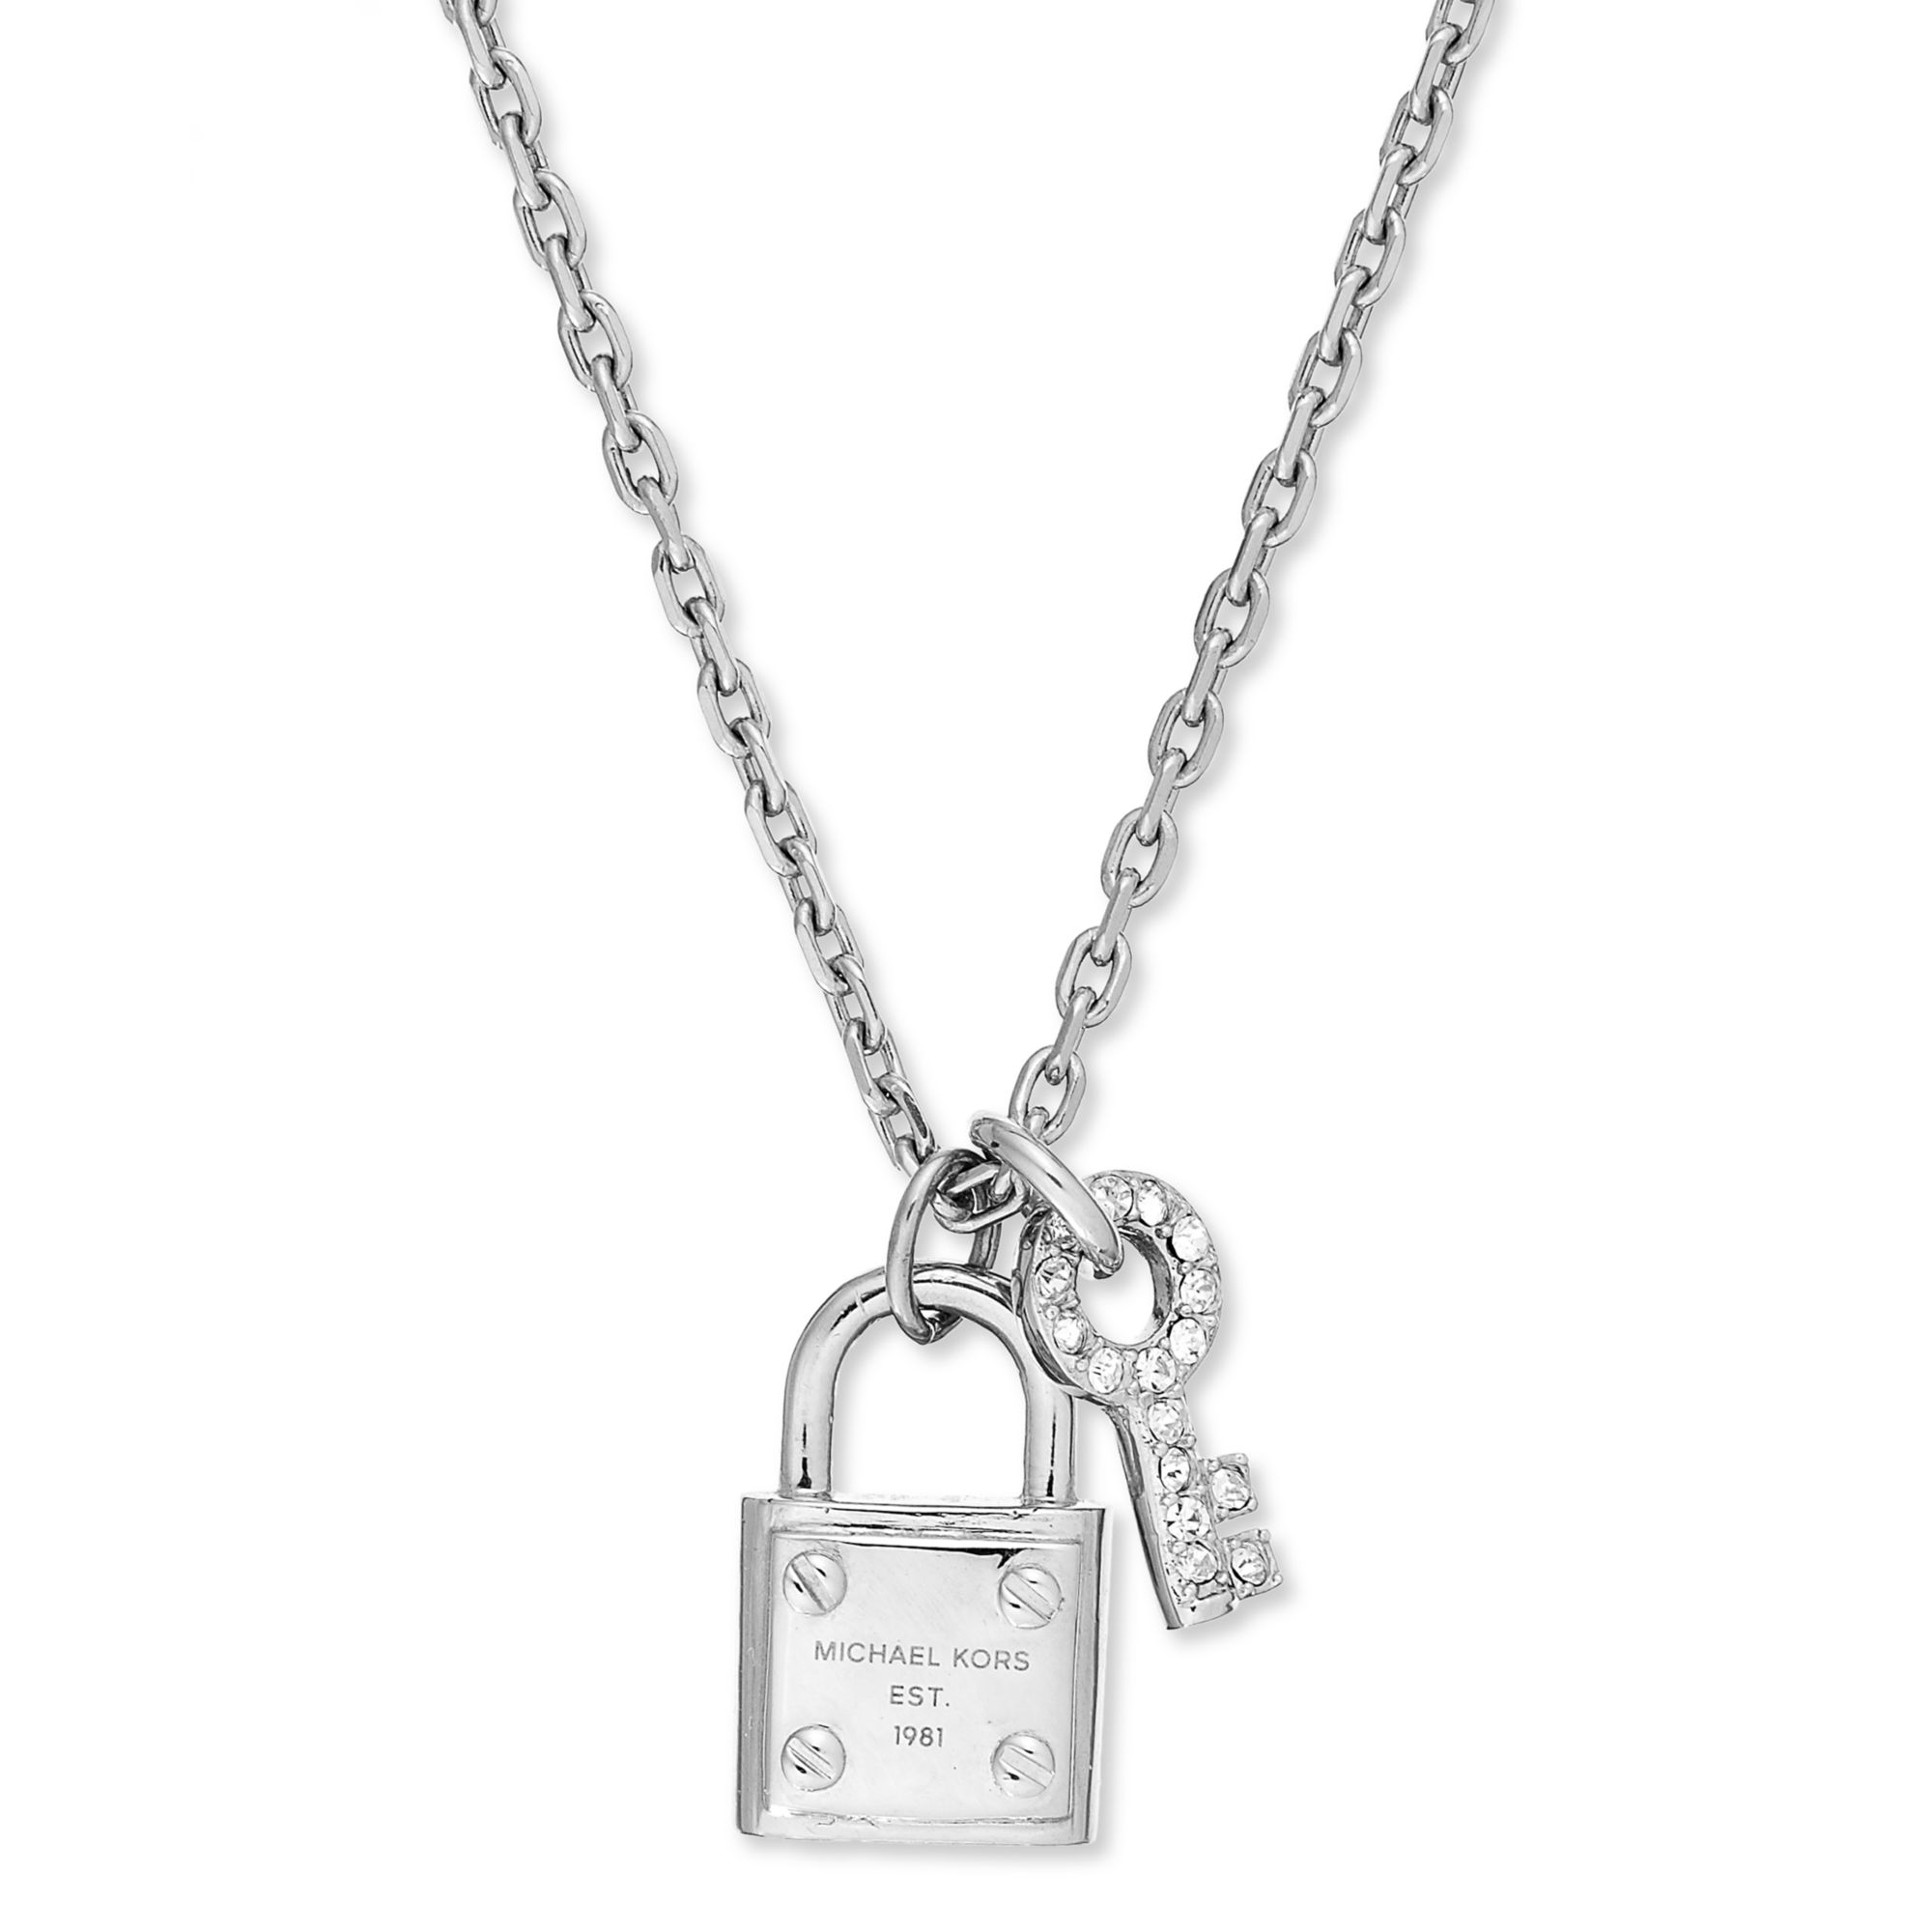 Lyst - Michael Kors Silvertone Padlock and Key Charm Necklace in Metallic